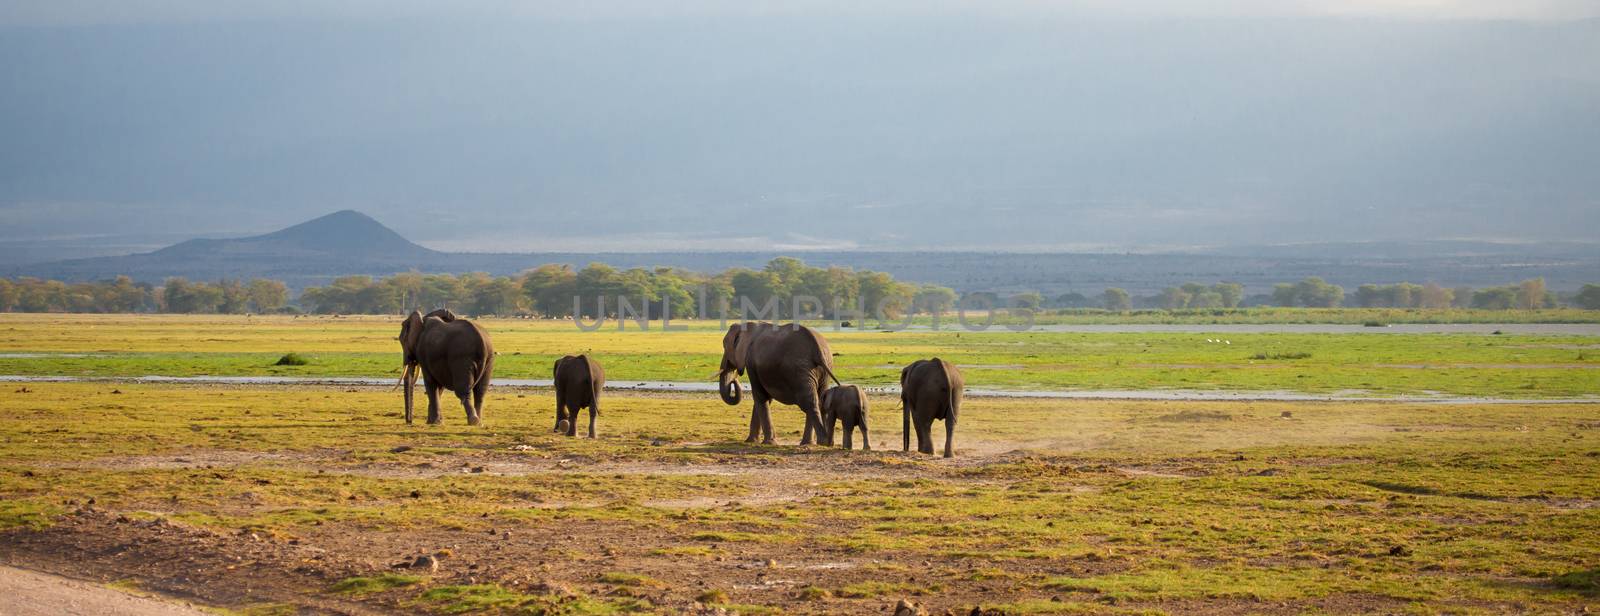 Elephant family is walking in the savannah in Kenya, on safari by 25ehaag6